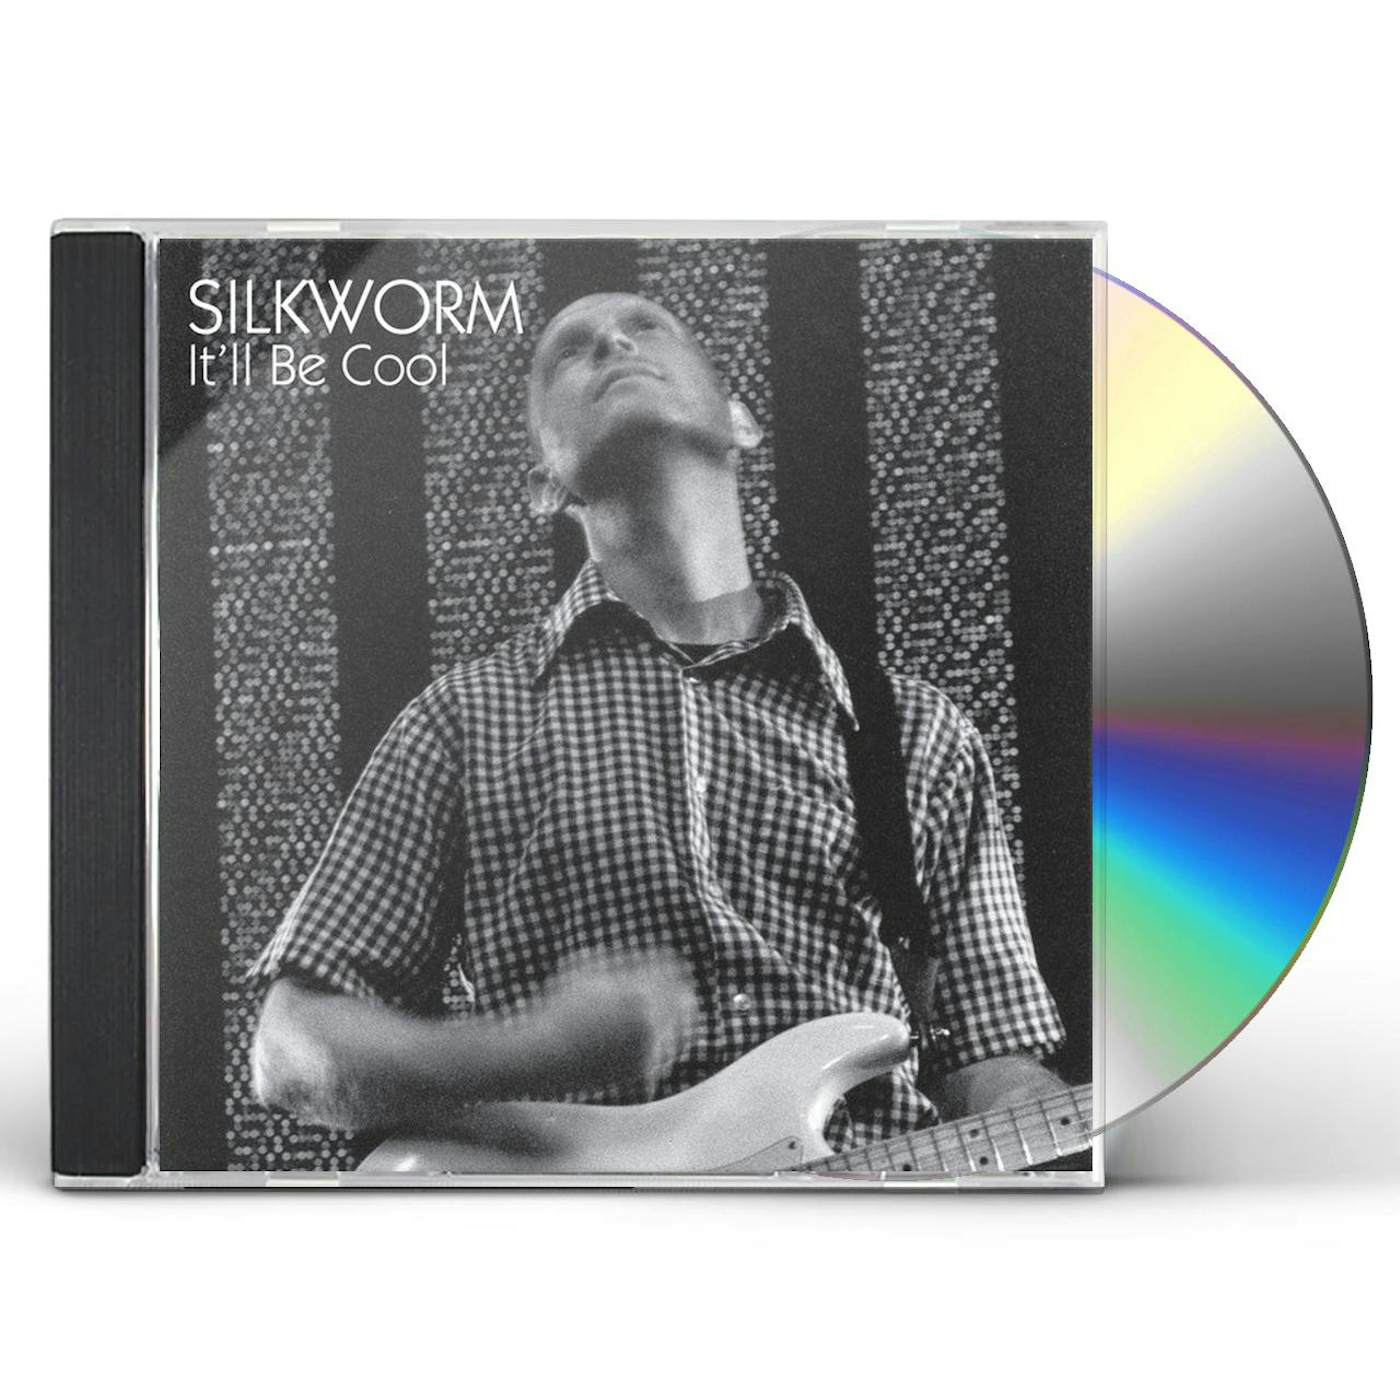 Silkworm IT'LL BE COOL CD